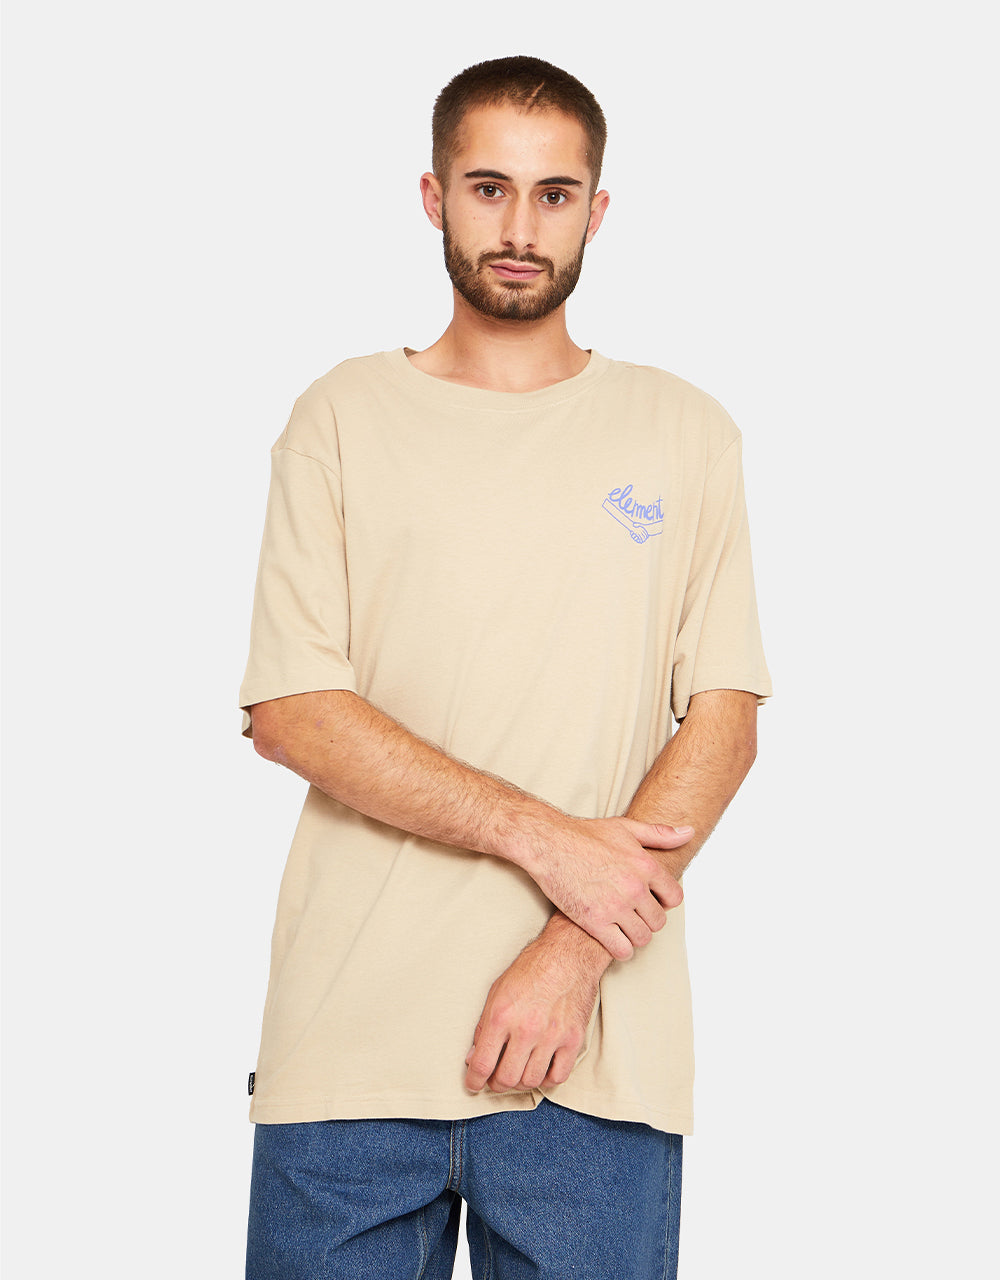 Element Collab T-Shirt - Oxford Tan